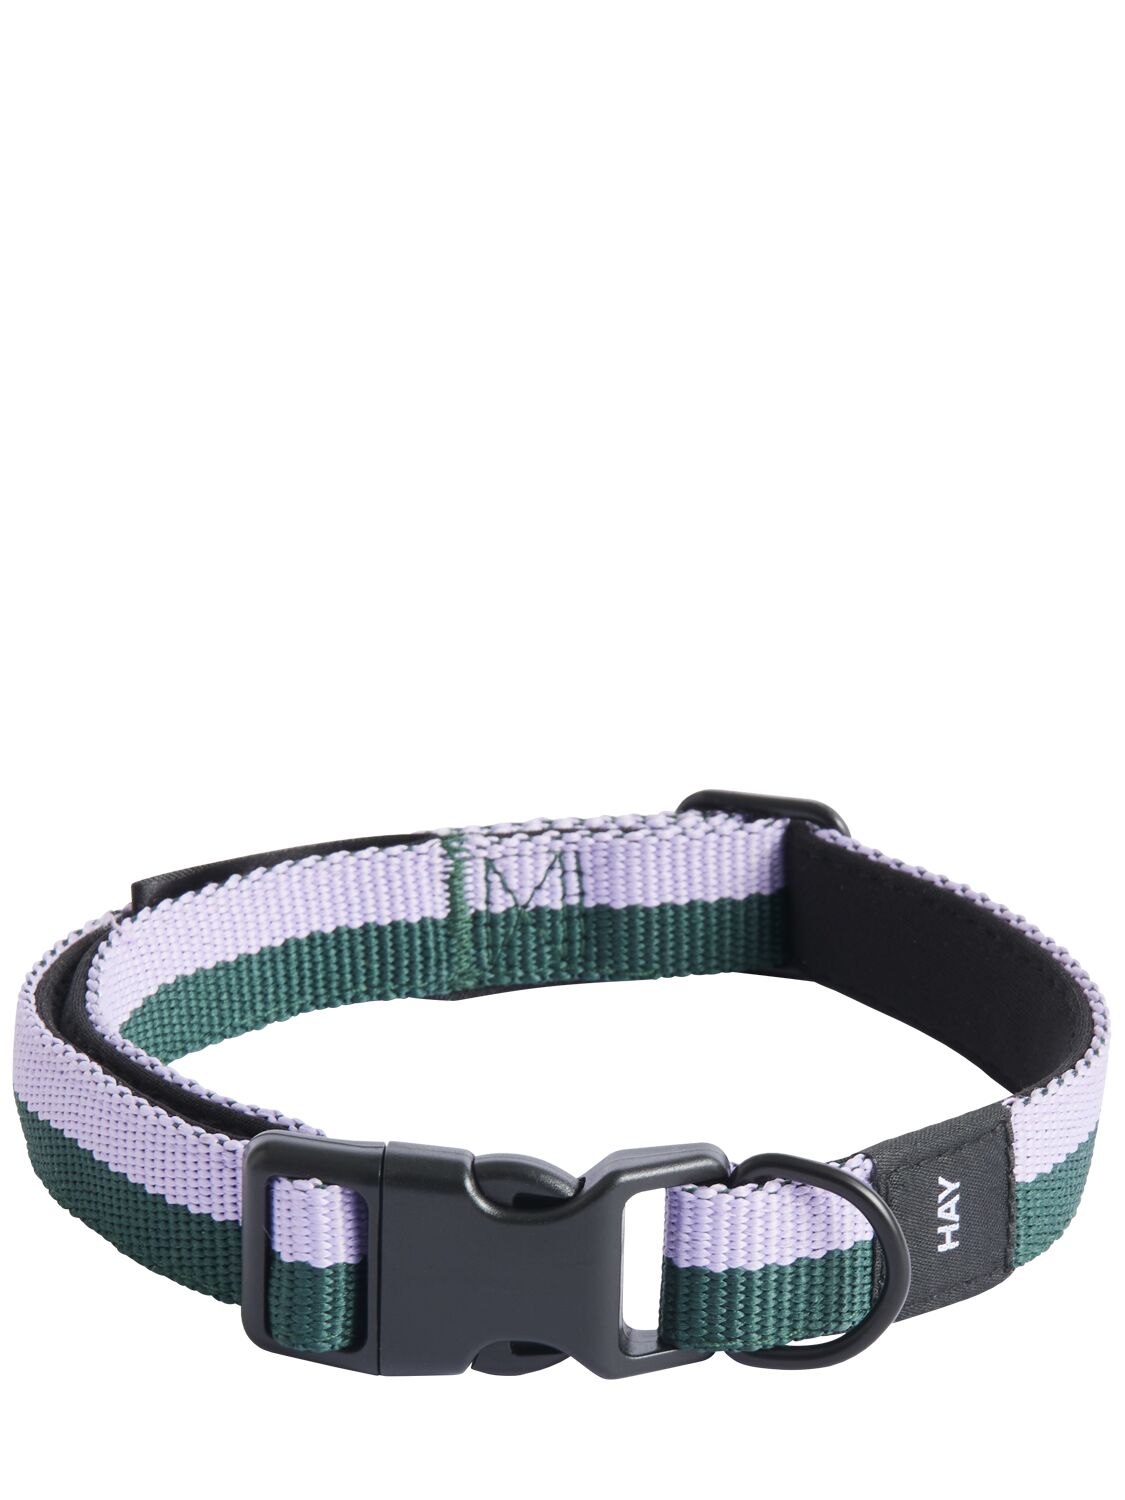 Image of Hay S/m Flat Dog Collar